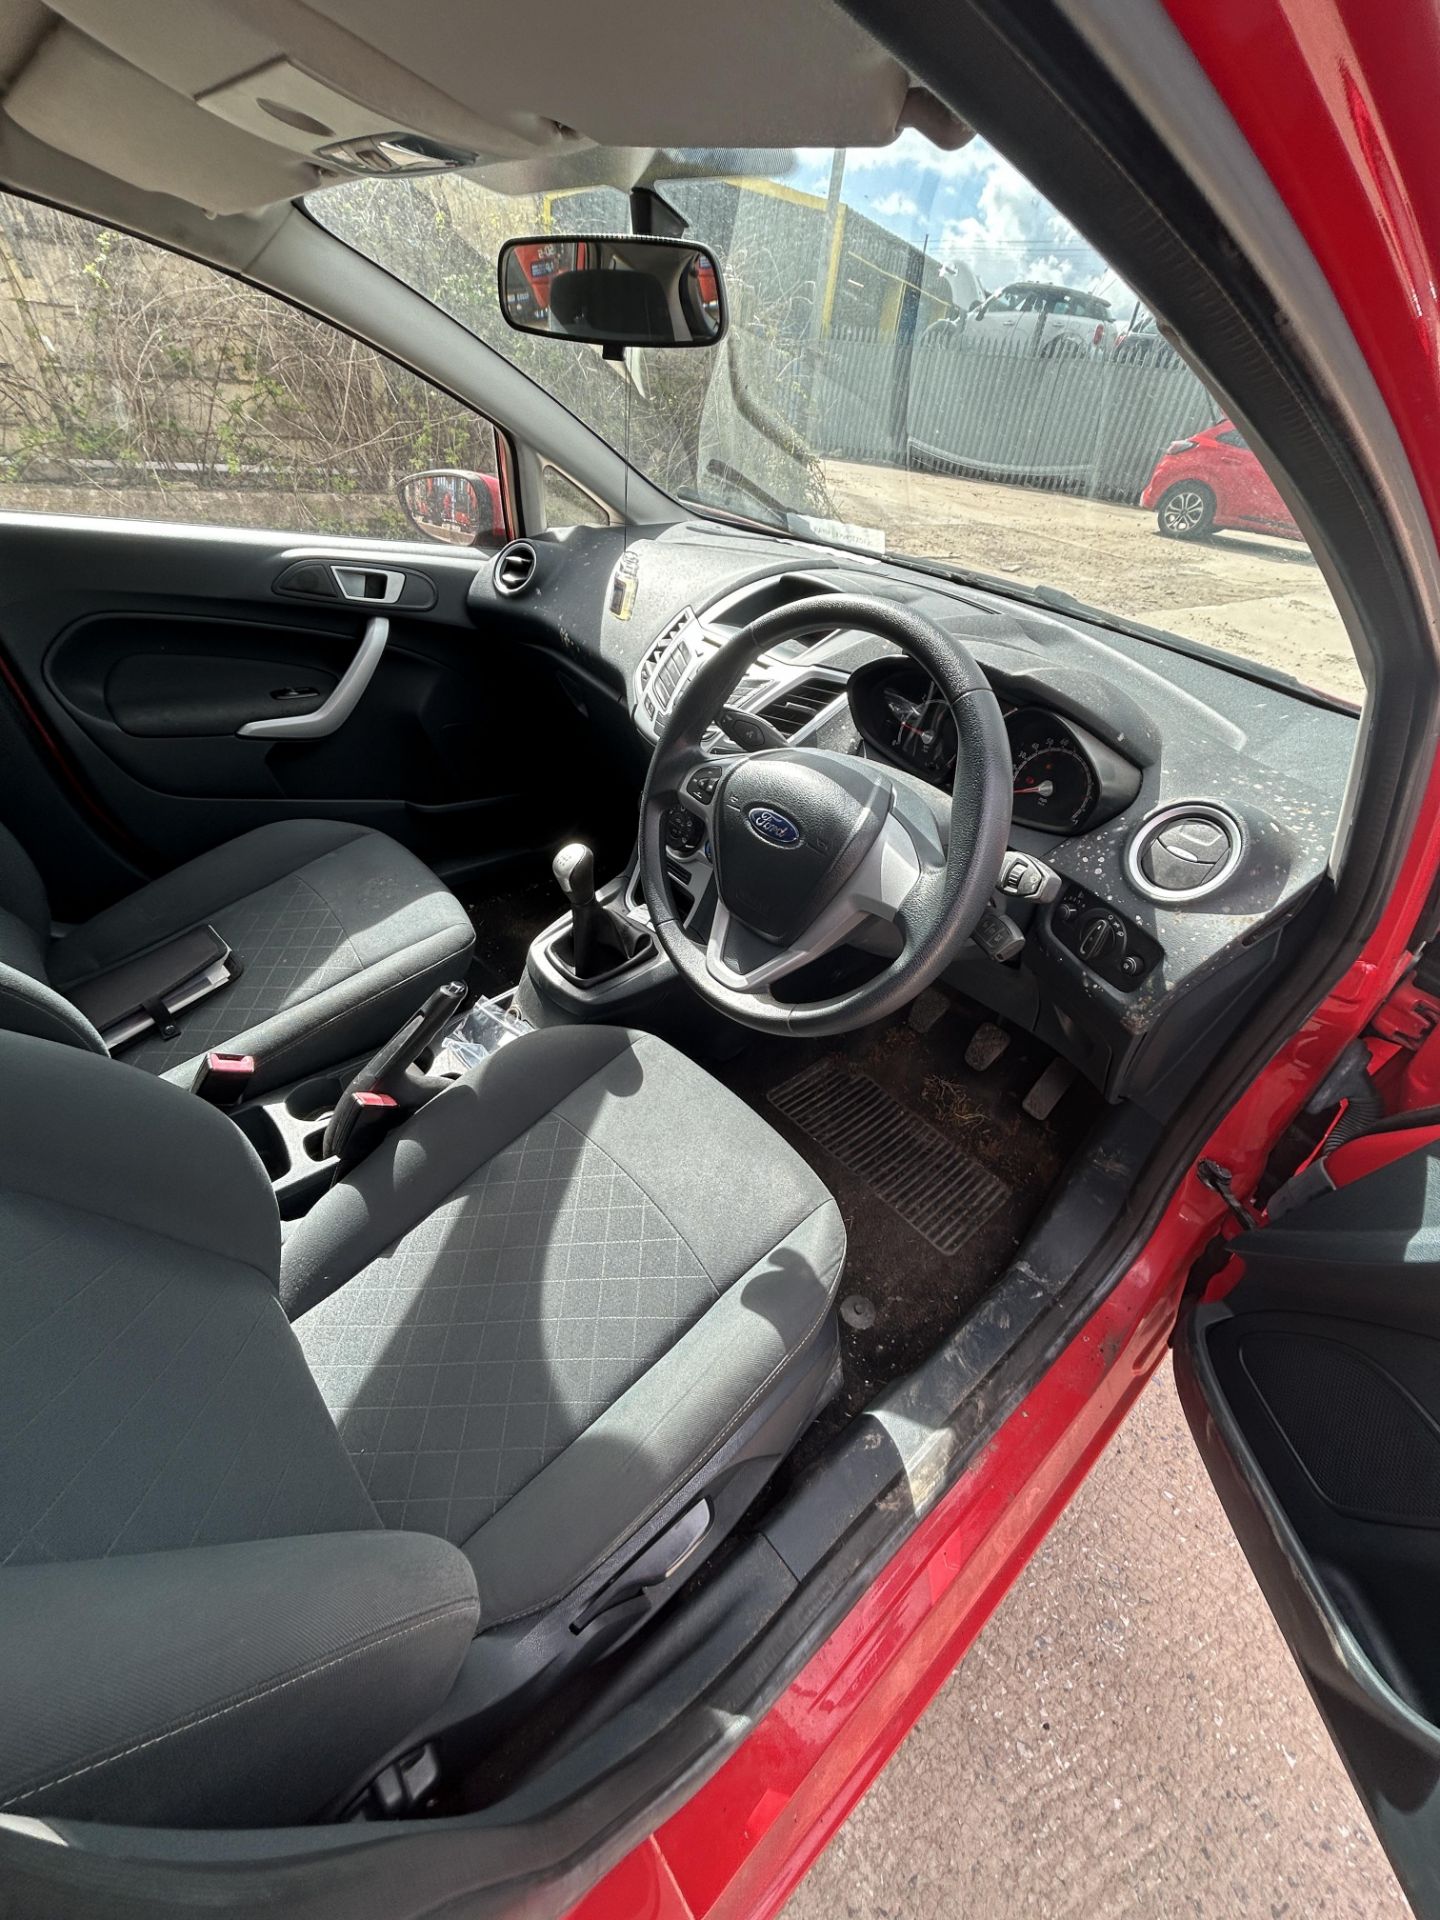 Ford Fiesta Edge TDCI 70 Diesel 5 Door Hatchback | MV12 ZVZ | 59,487 Miles - Image 11 of 15